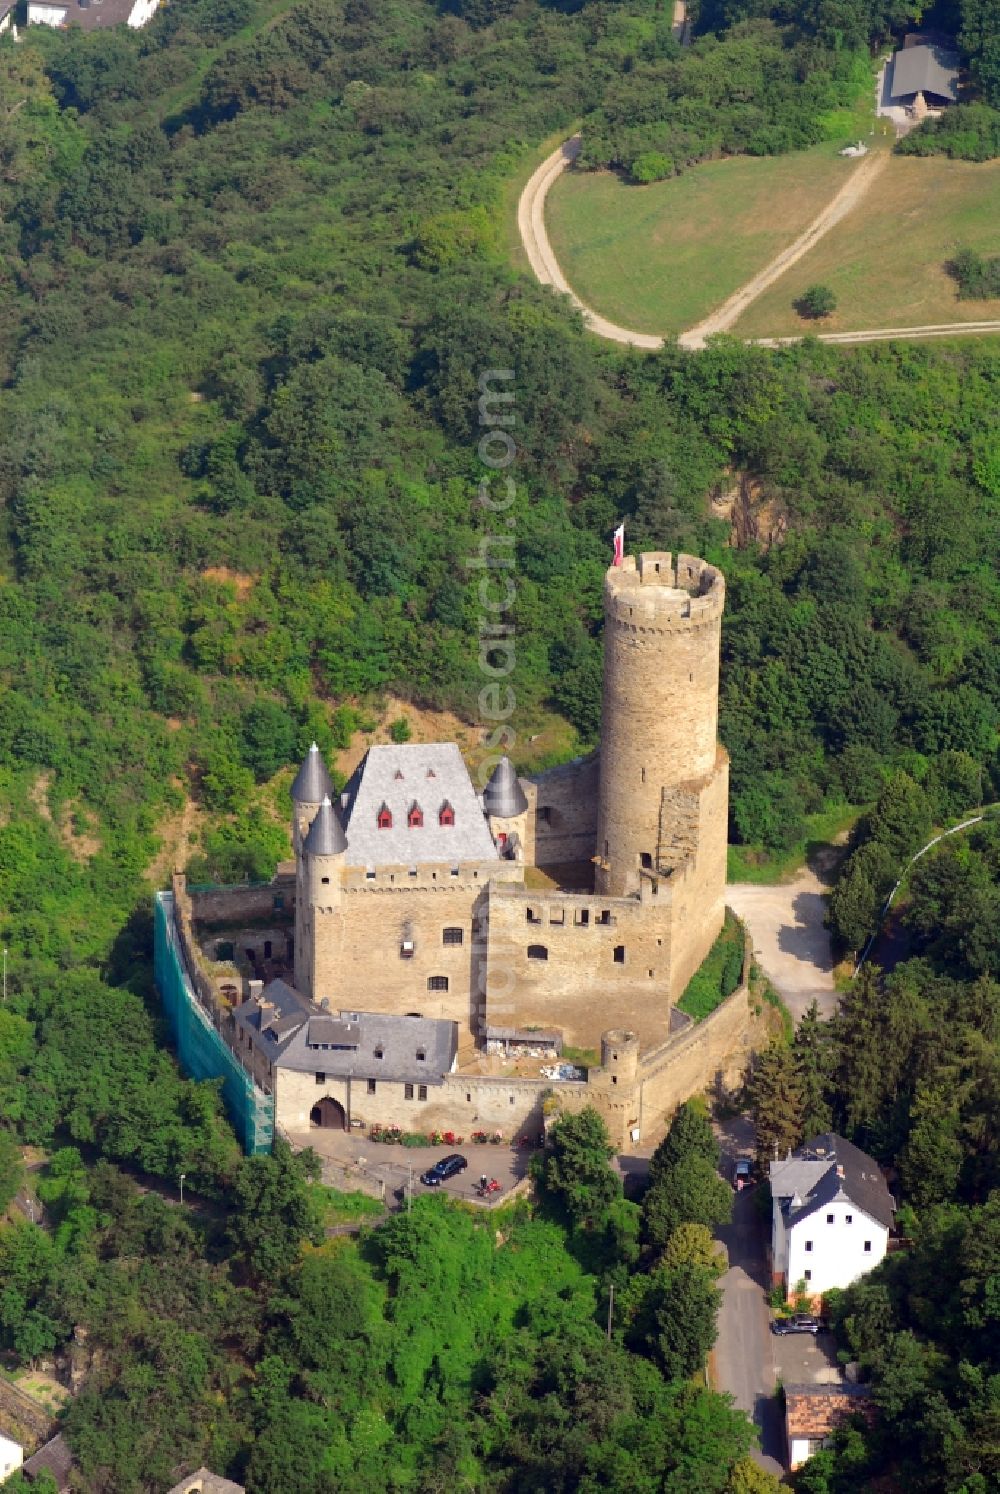 Burgschwalbach from the bird's eye view: Castle of the fortress Schwalbach in Burgschwalbach in the state Rhineland-Palatinate, Germany